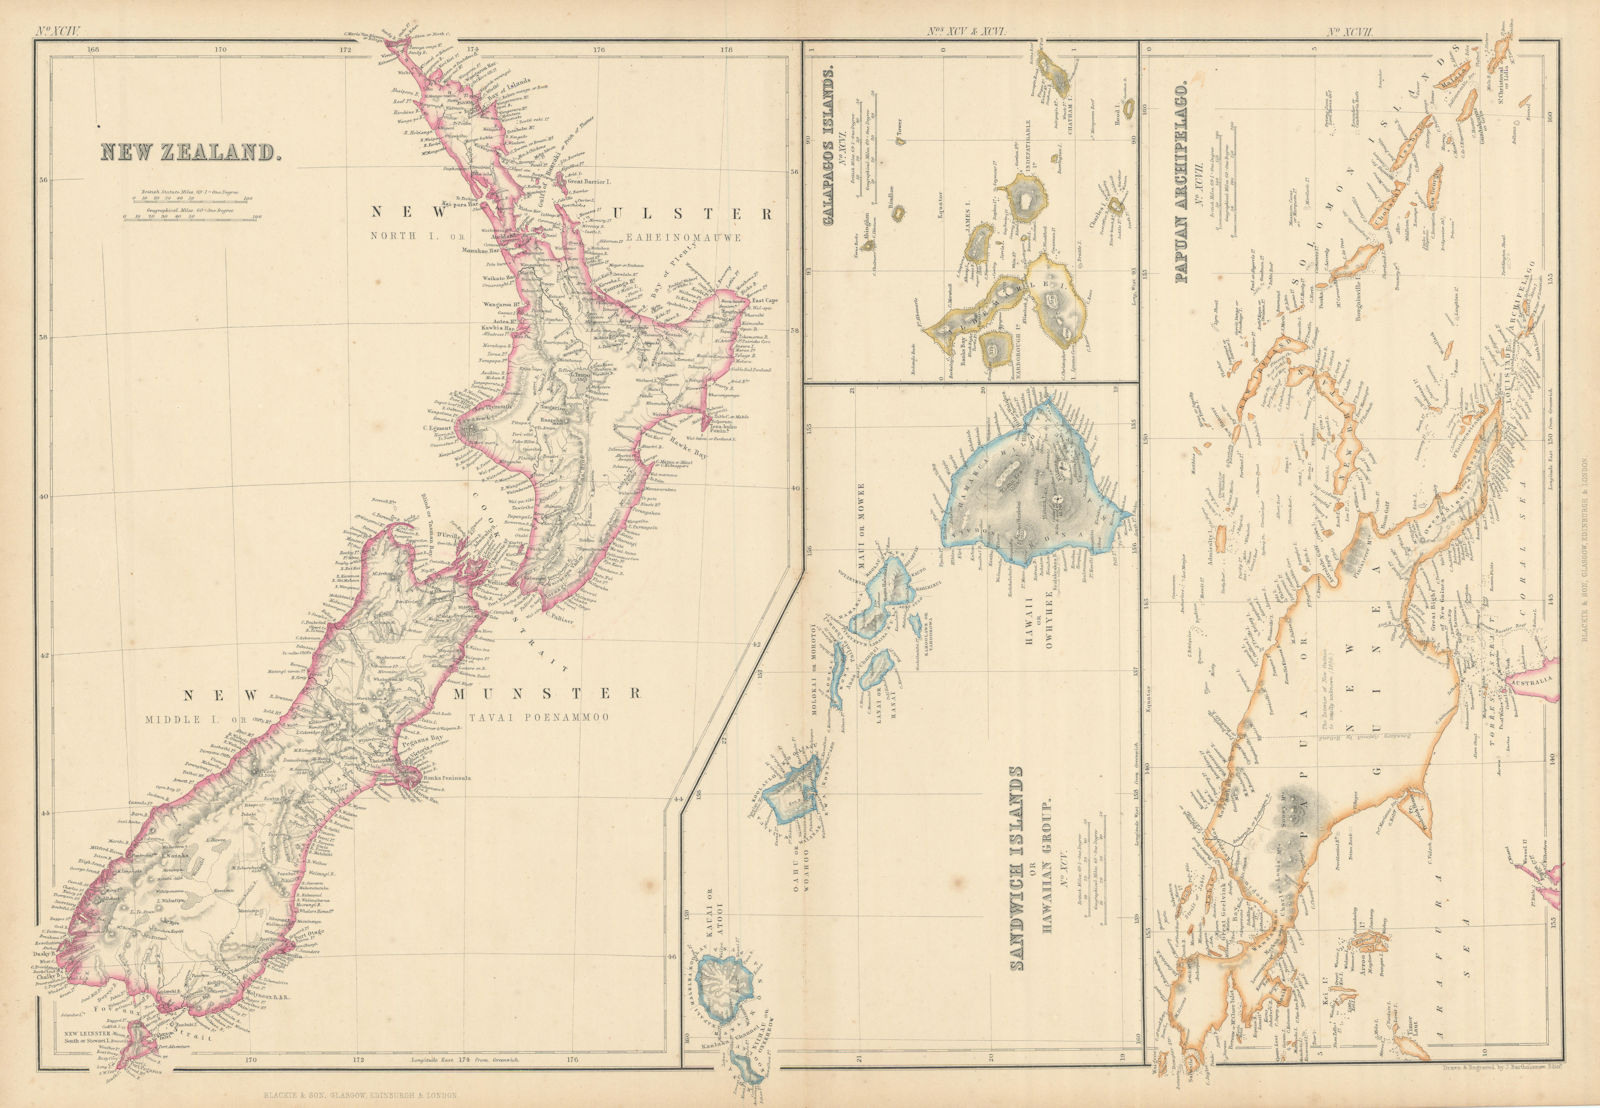 New Zealand Sandwich Galapagos Islands. Papuan Archipelago. Melanesia 1860 map